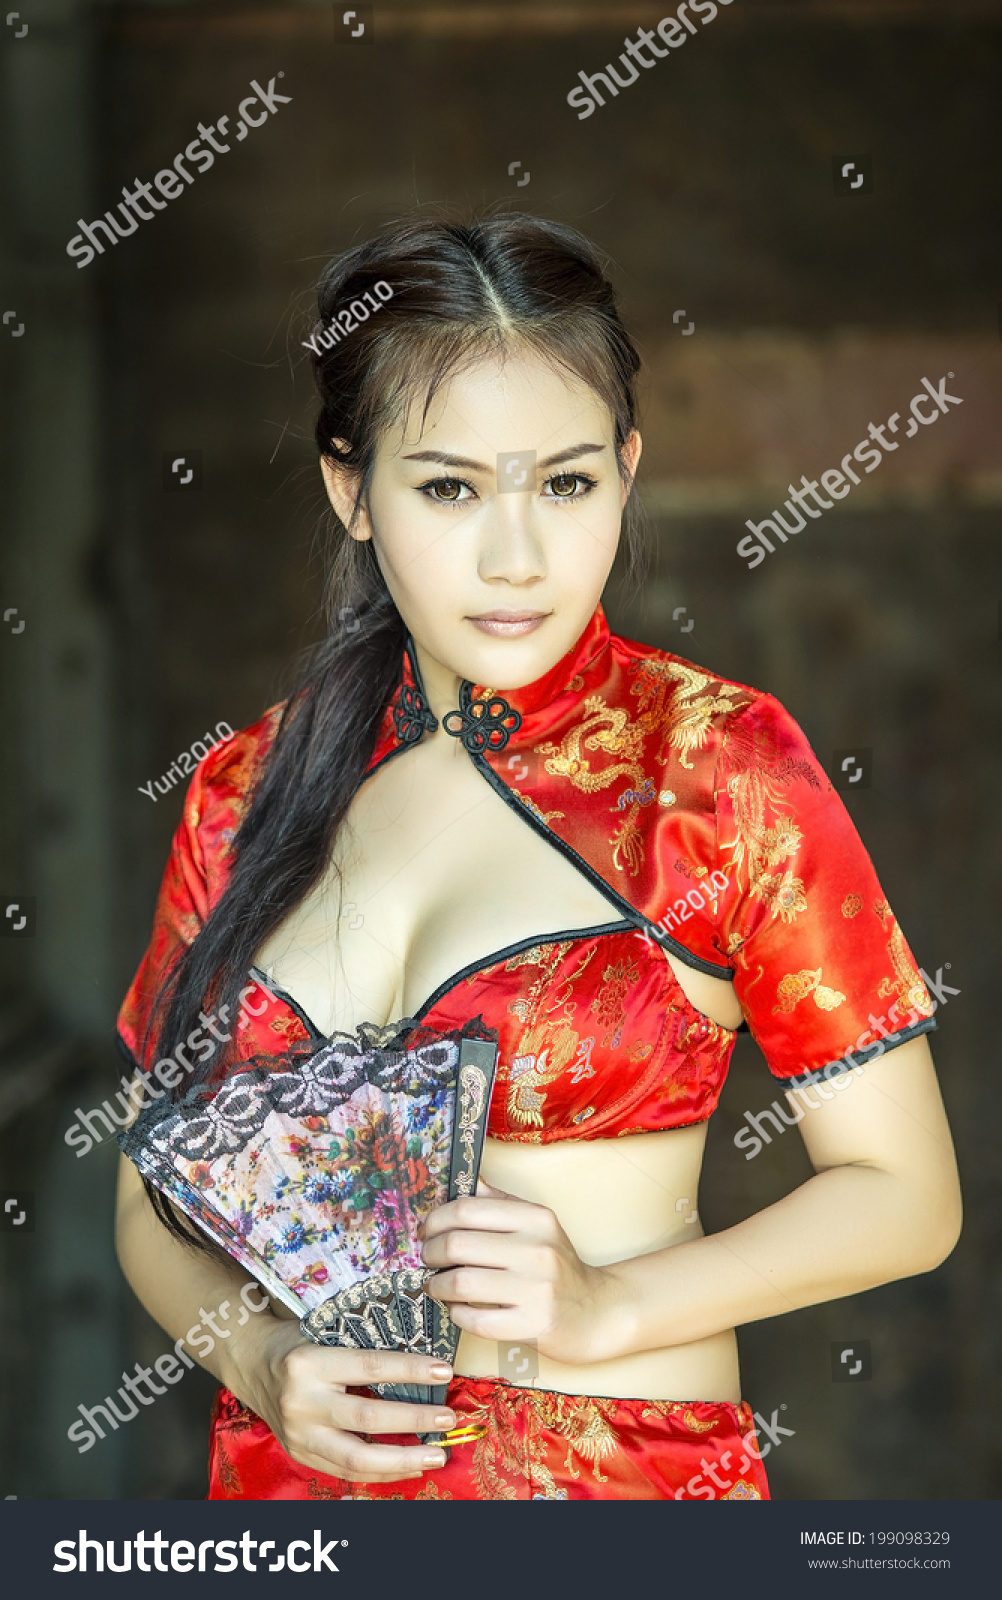 andre estrada share chinese sexy girls photo photos